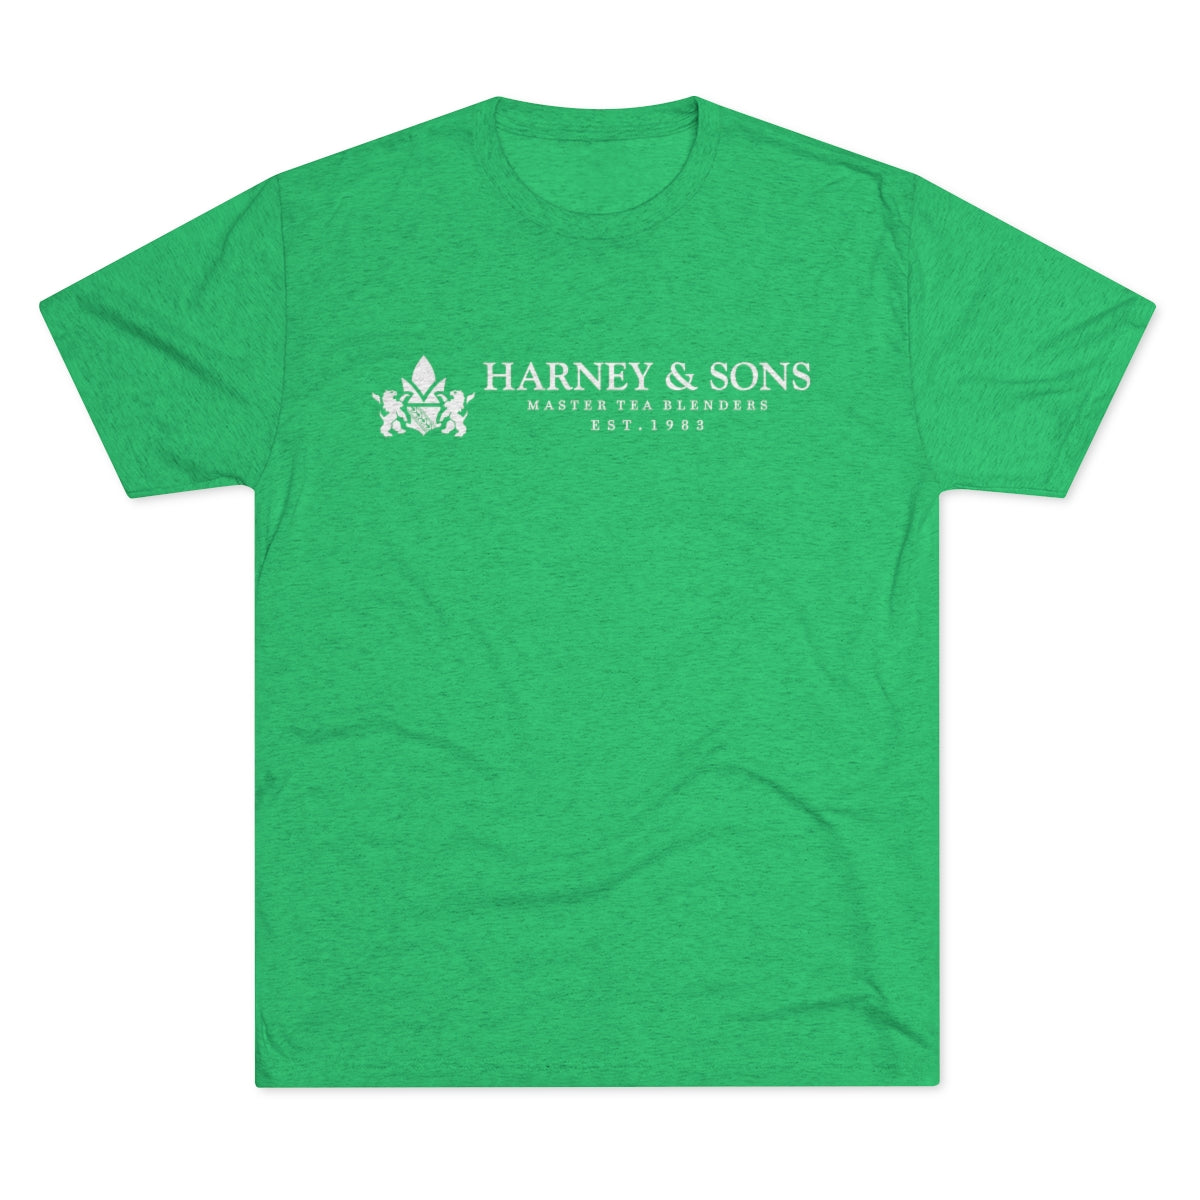 Harney & Sons - Est. 1983 Graphic Tee - Tri-Blend Envy S - Harney & Sons Fine Teas